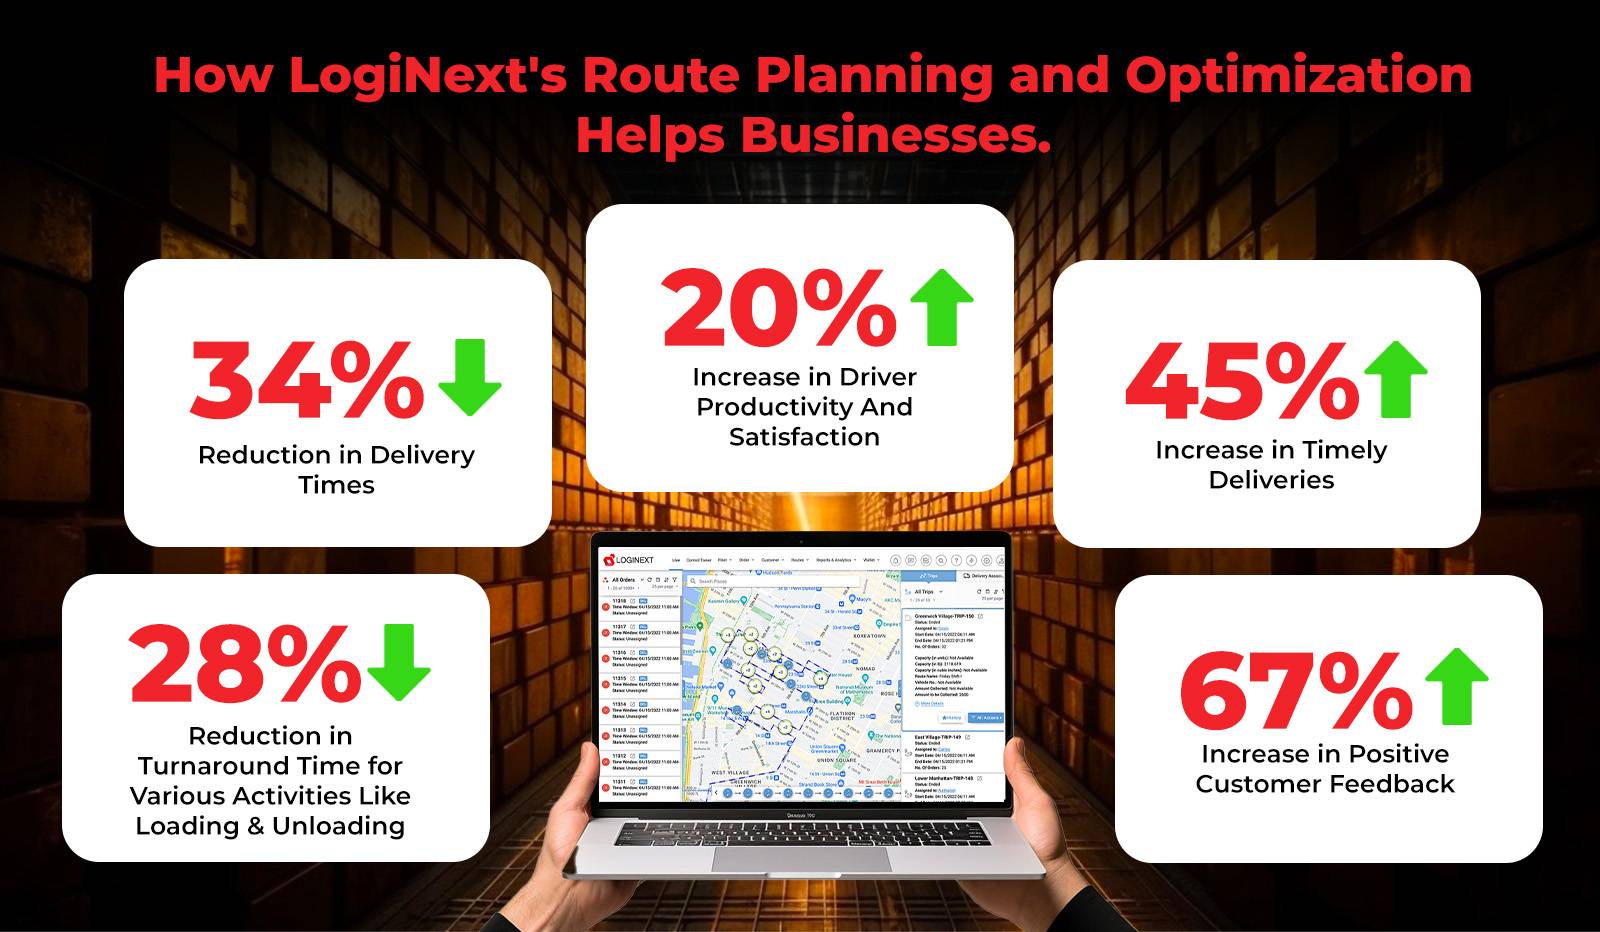 LogiNext のルート計画および最適化ソフトウェアがビジネスにどのように役立つか